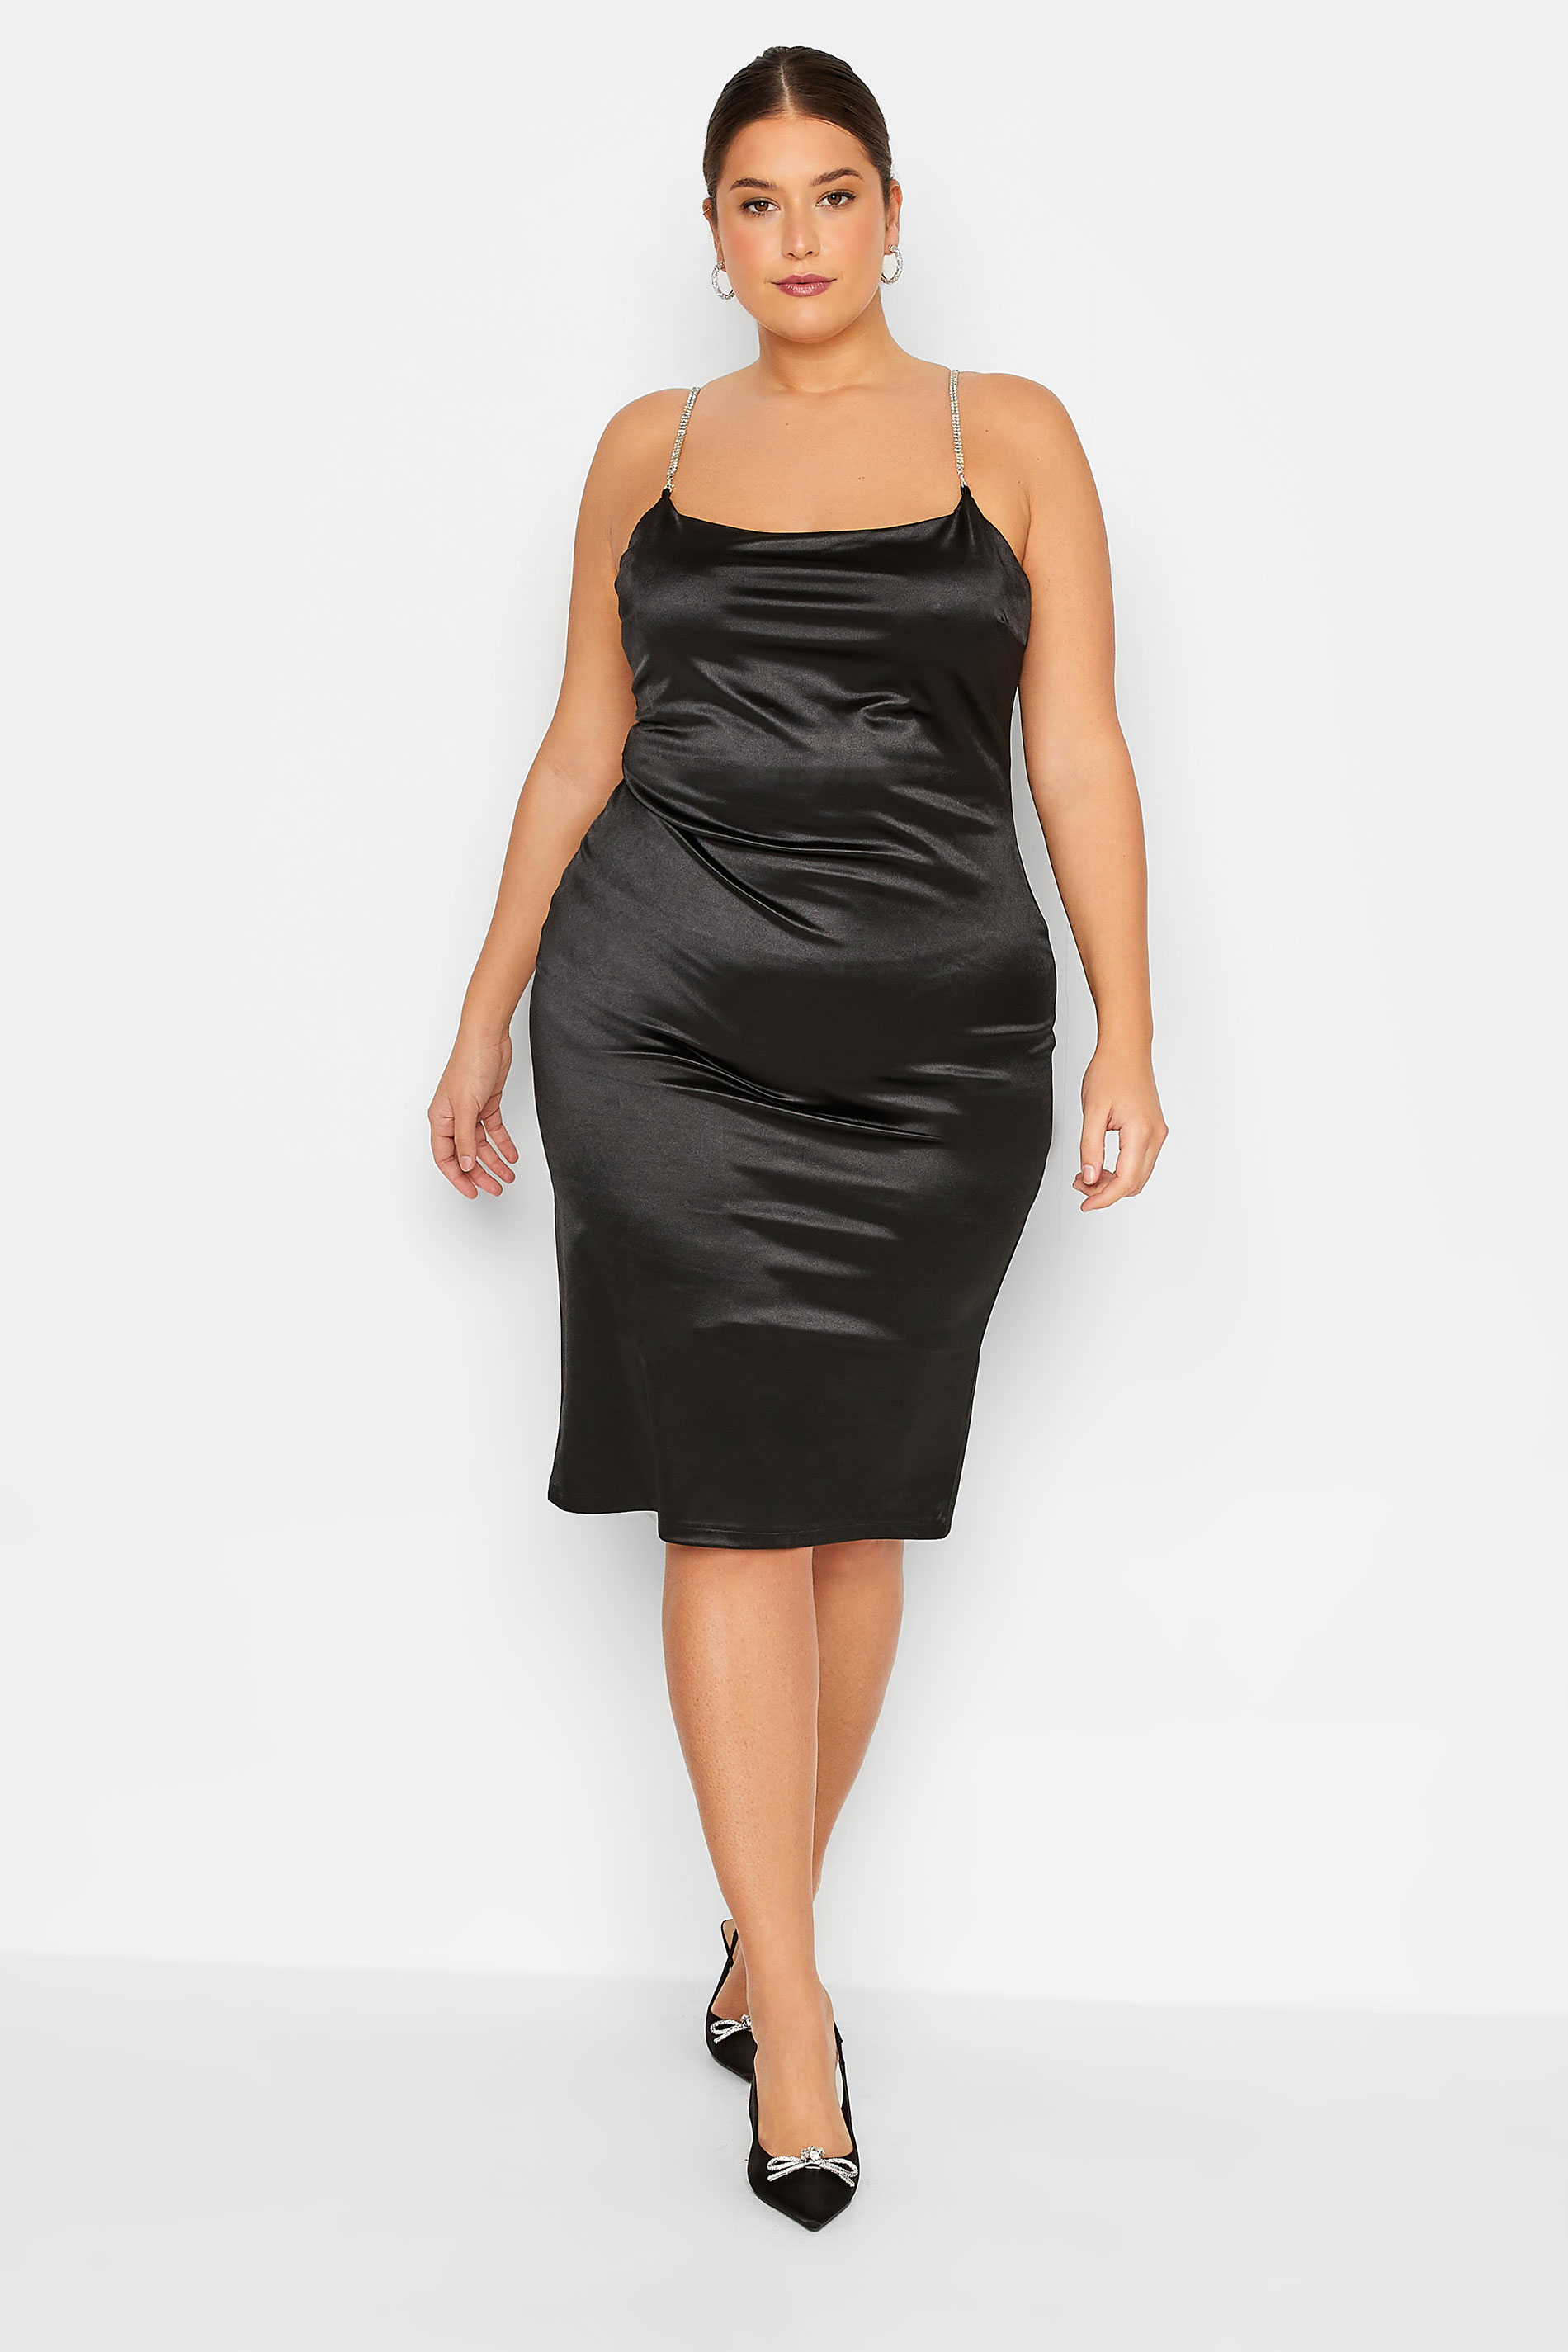 LTS Tall Black Diamante Strap Satin Mini Slip Dress | Long Tall Sally  2